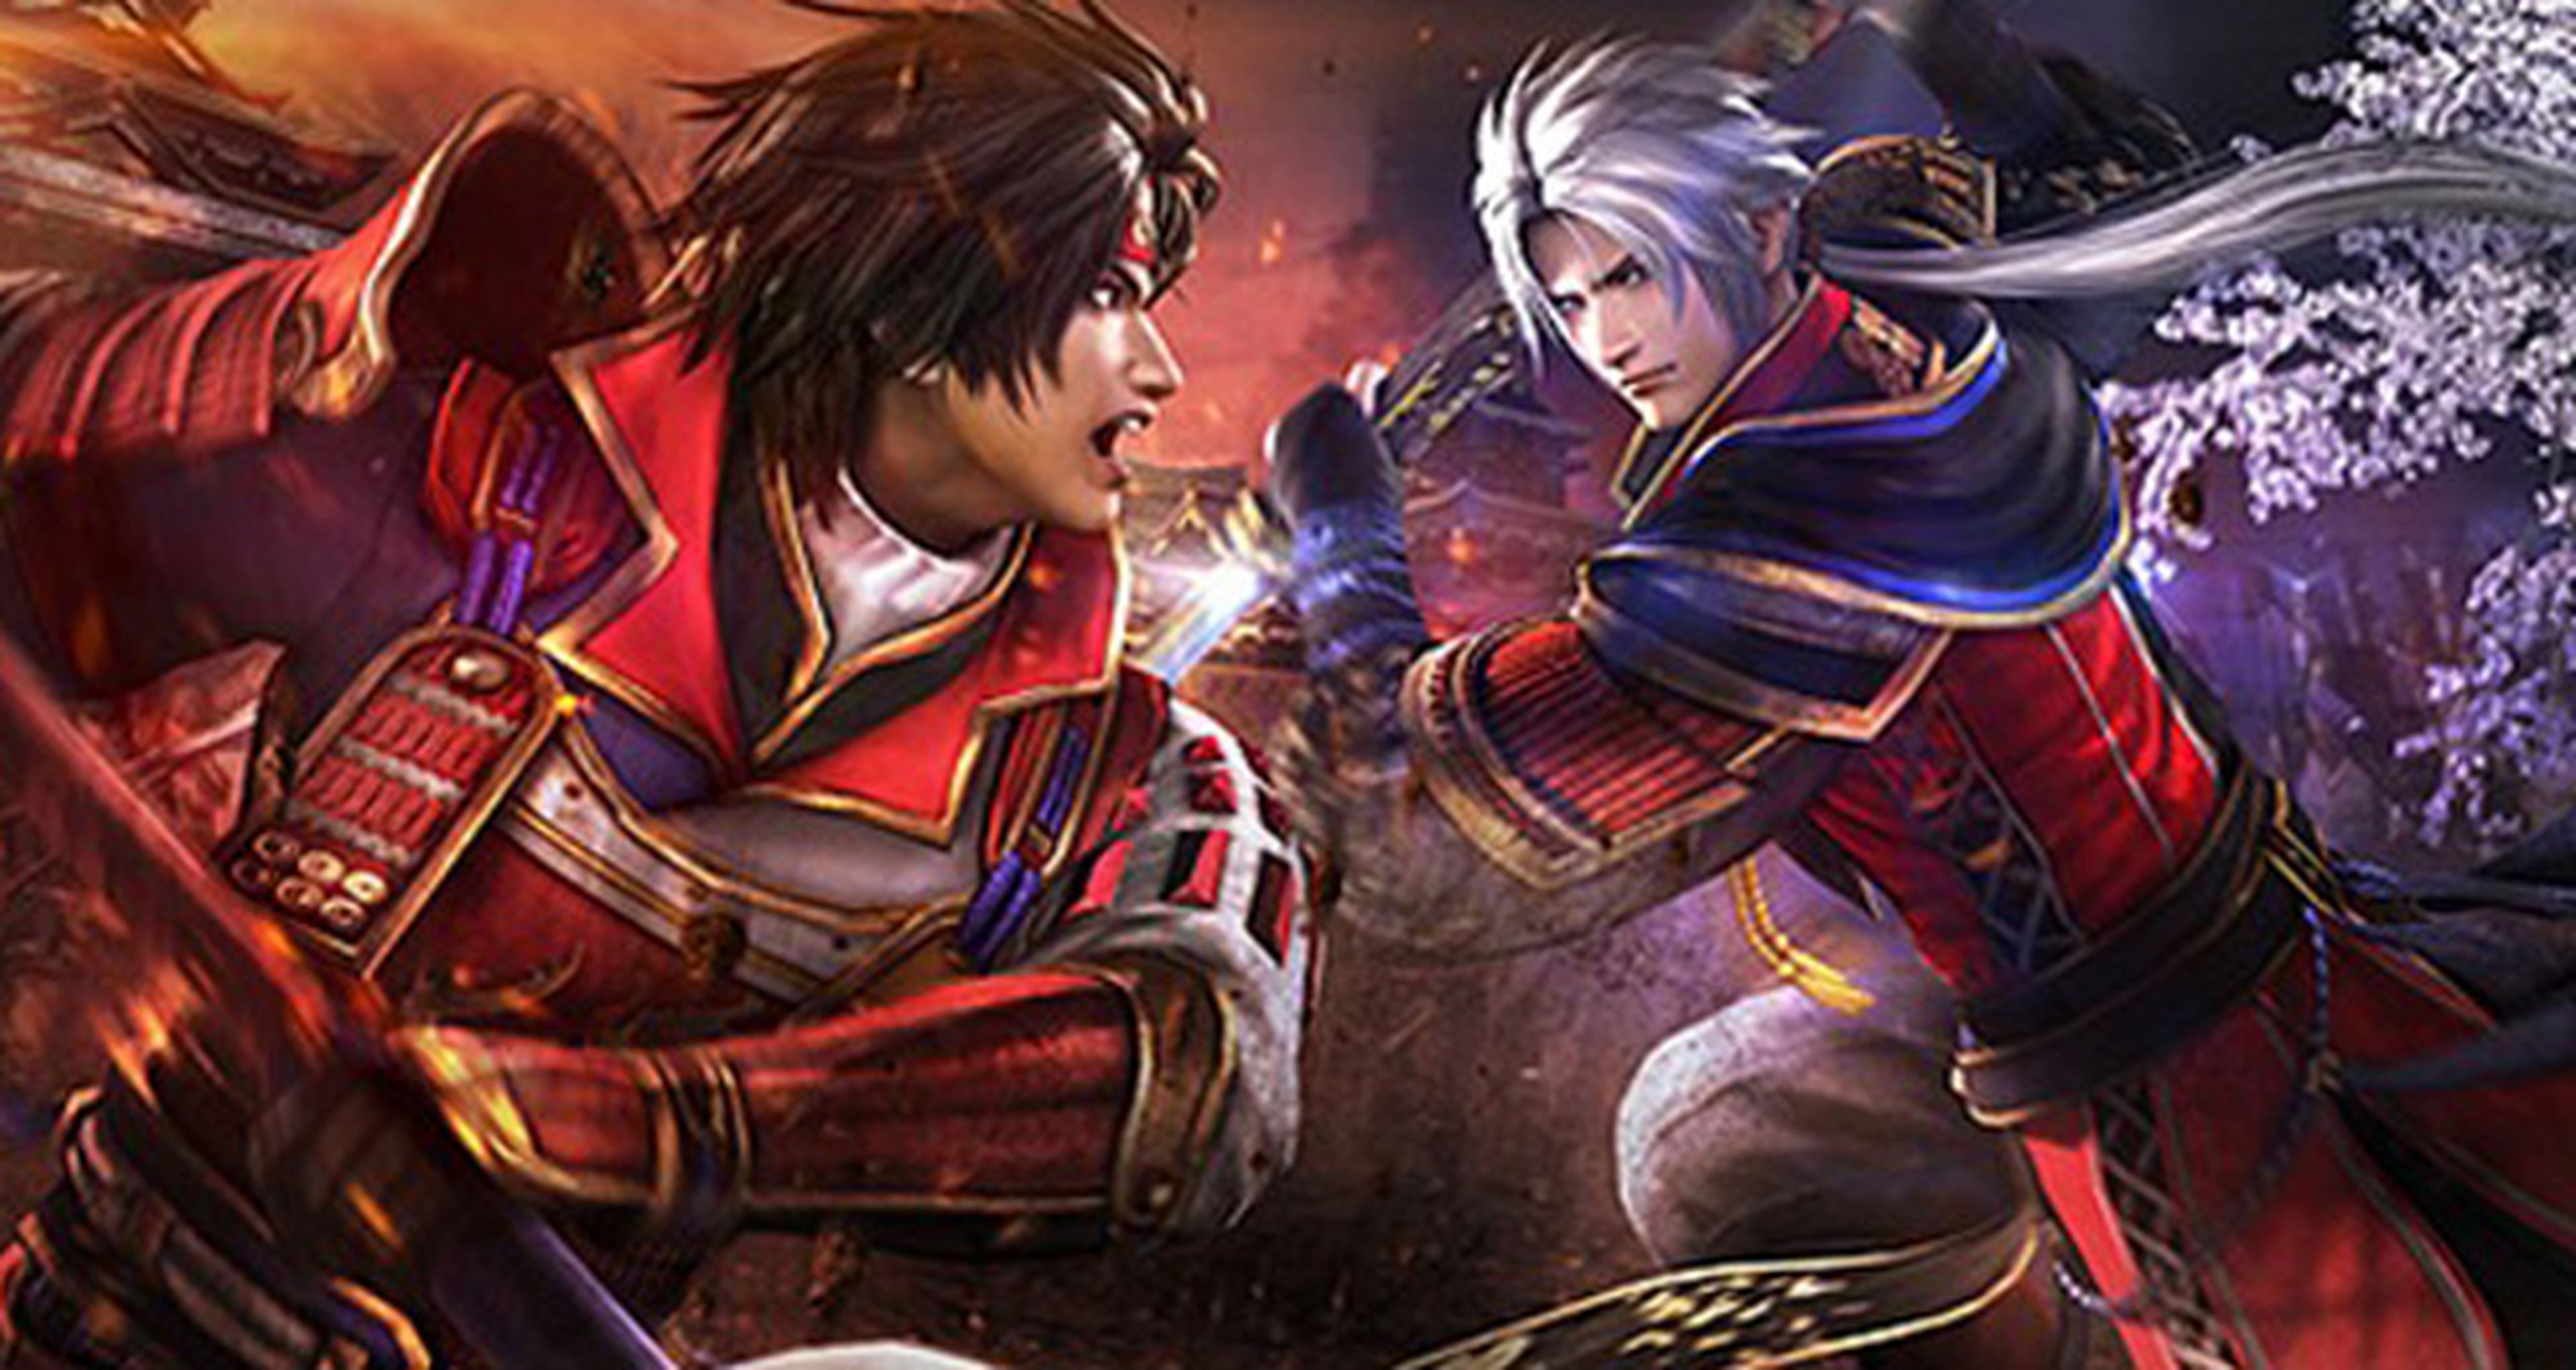 Samurai Warriors 4 contará con una edición especial en PS4